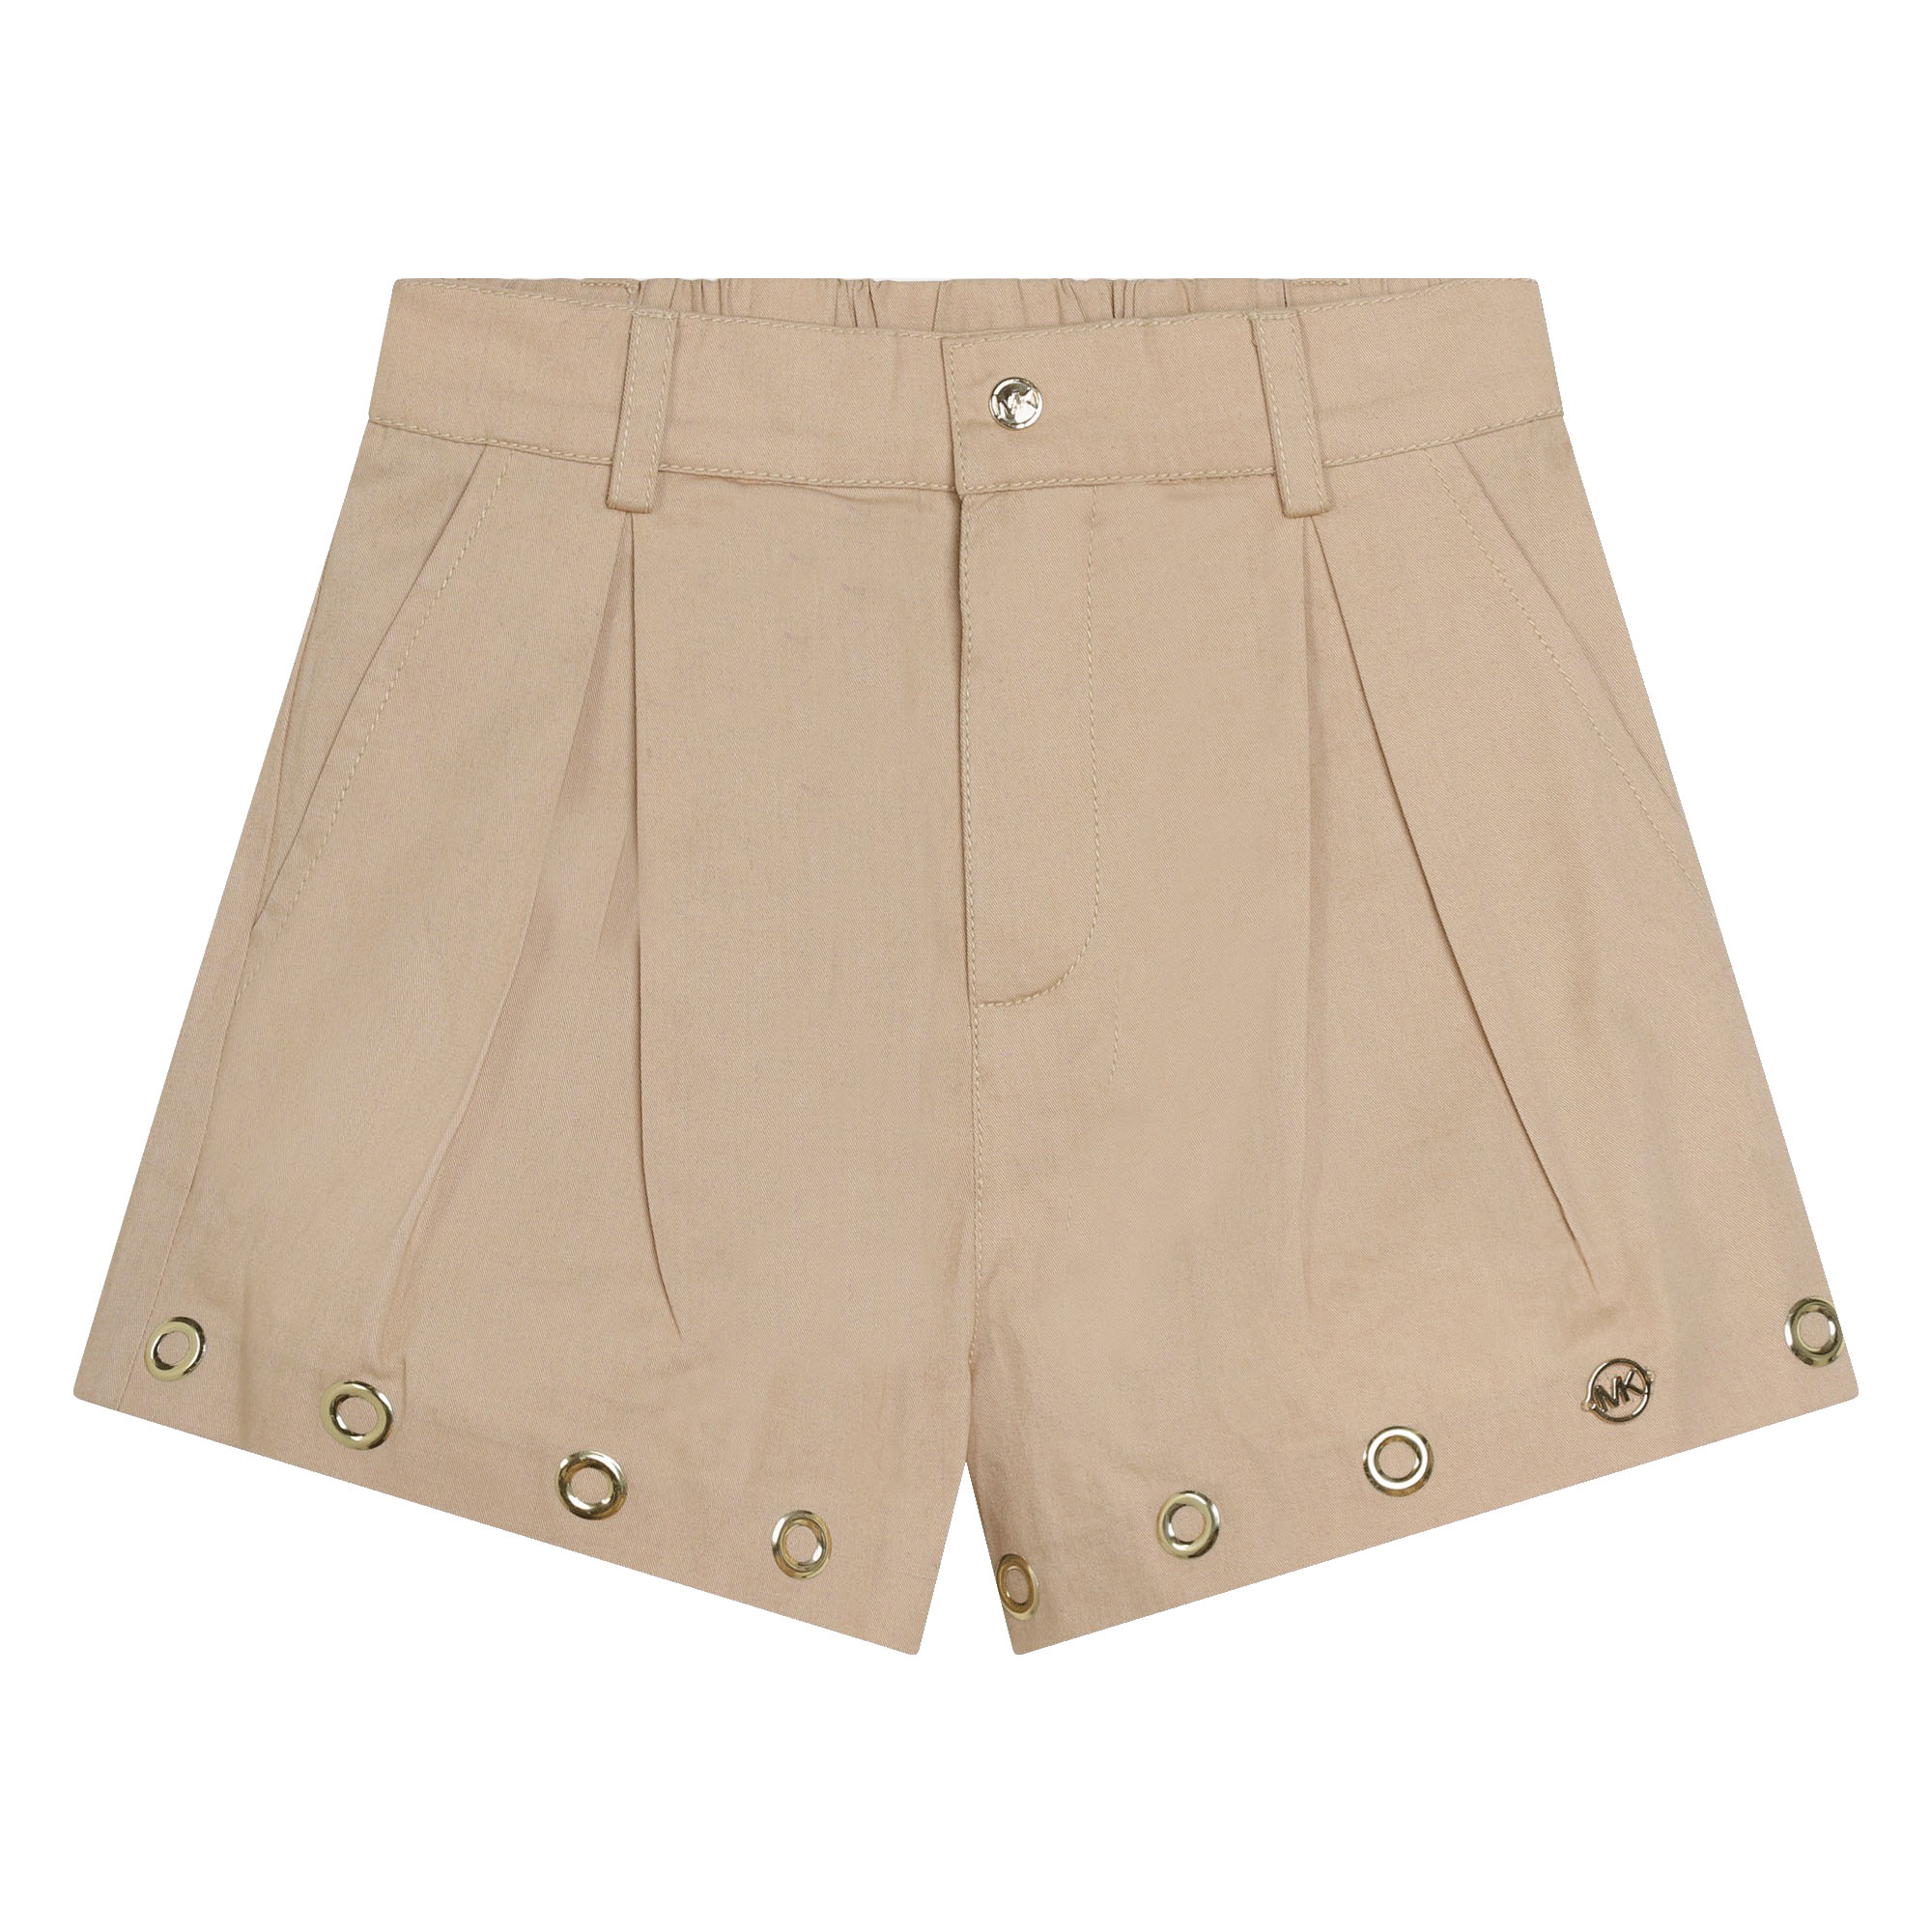 Cotton shorts MICHAEL KORS for GIRL